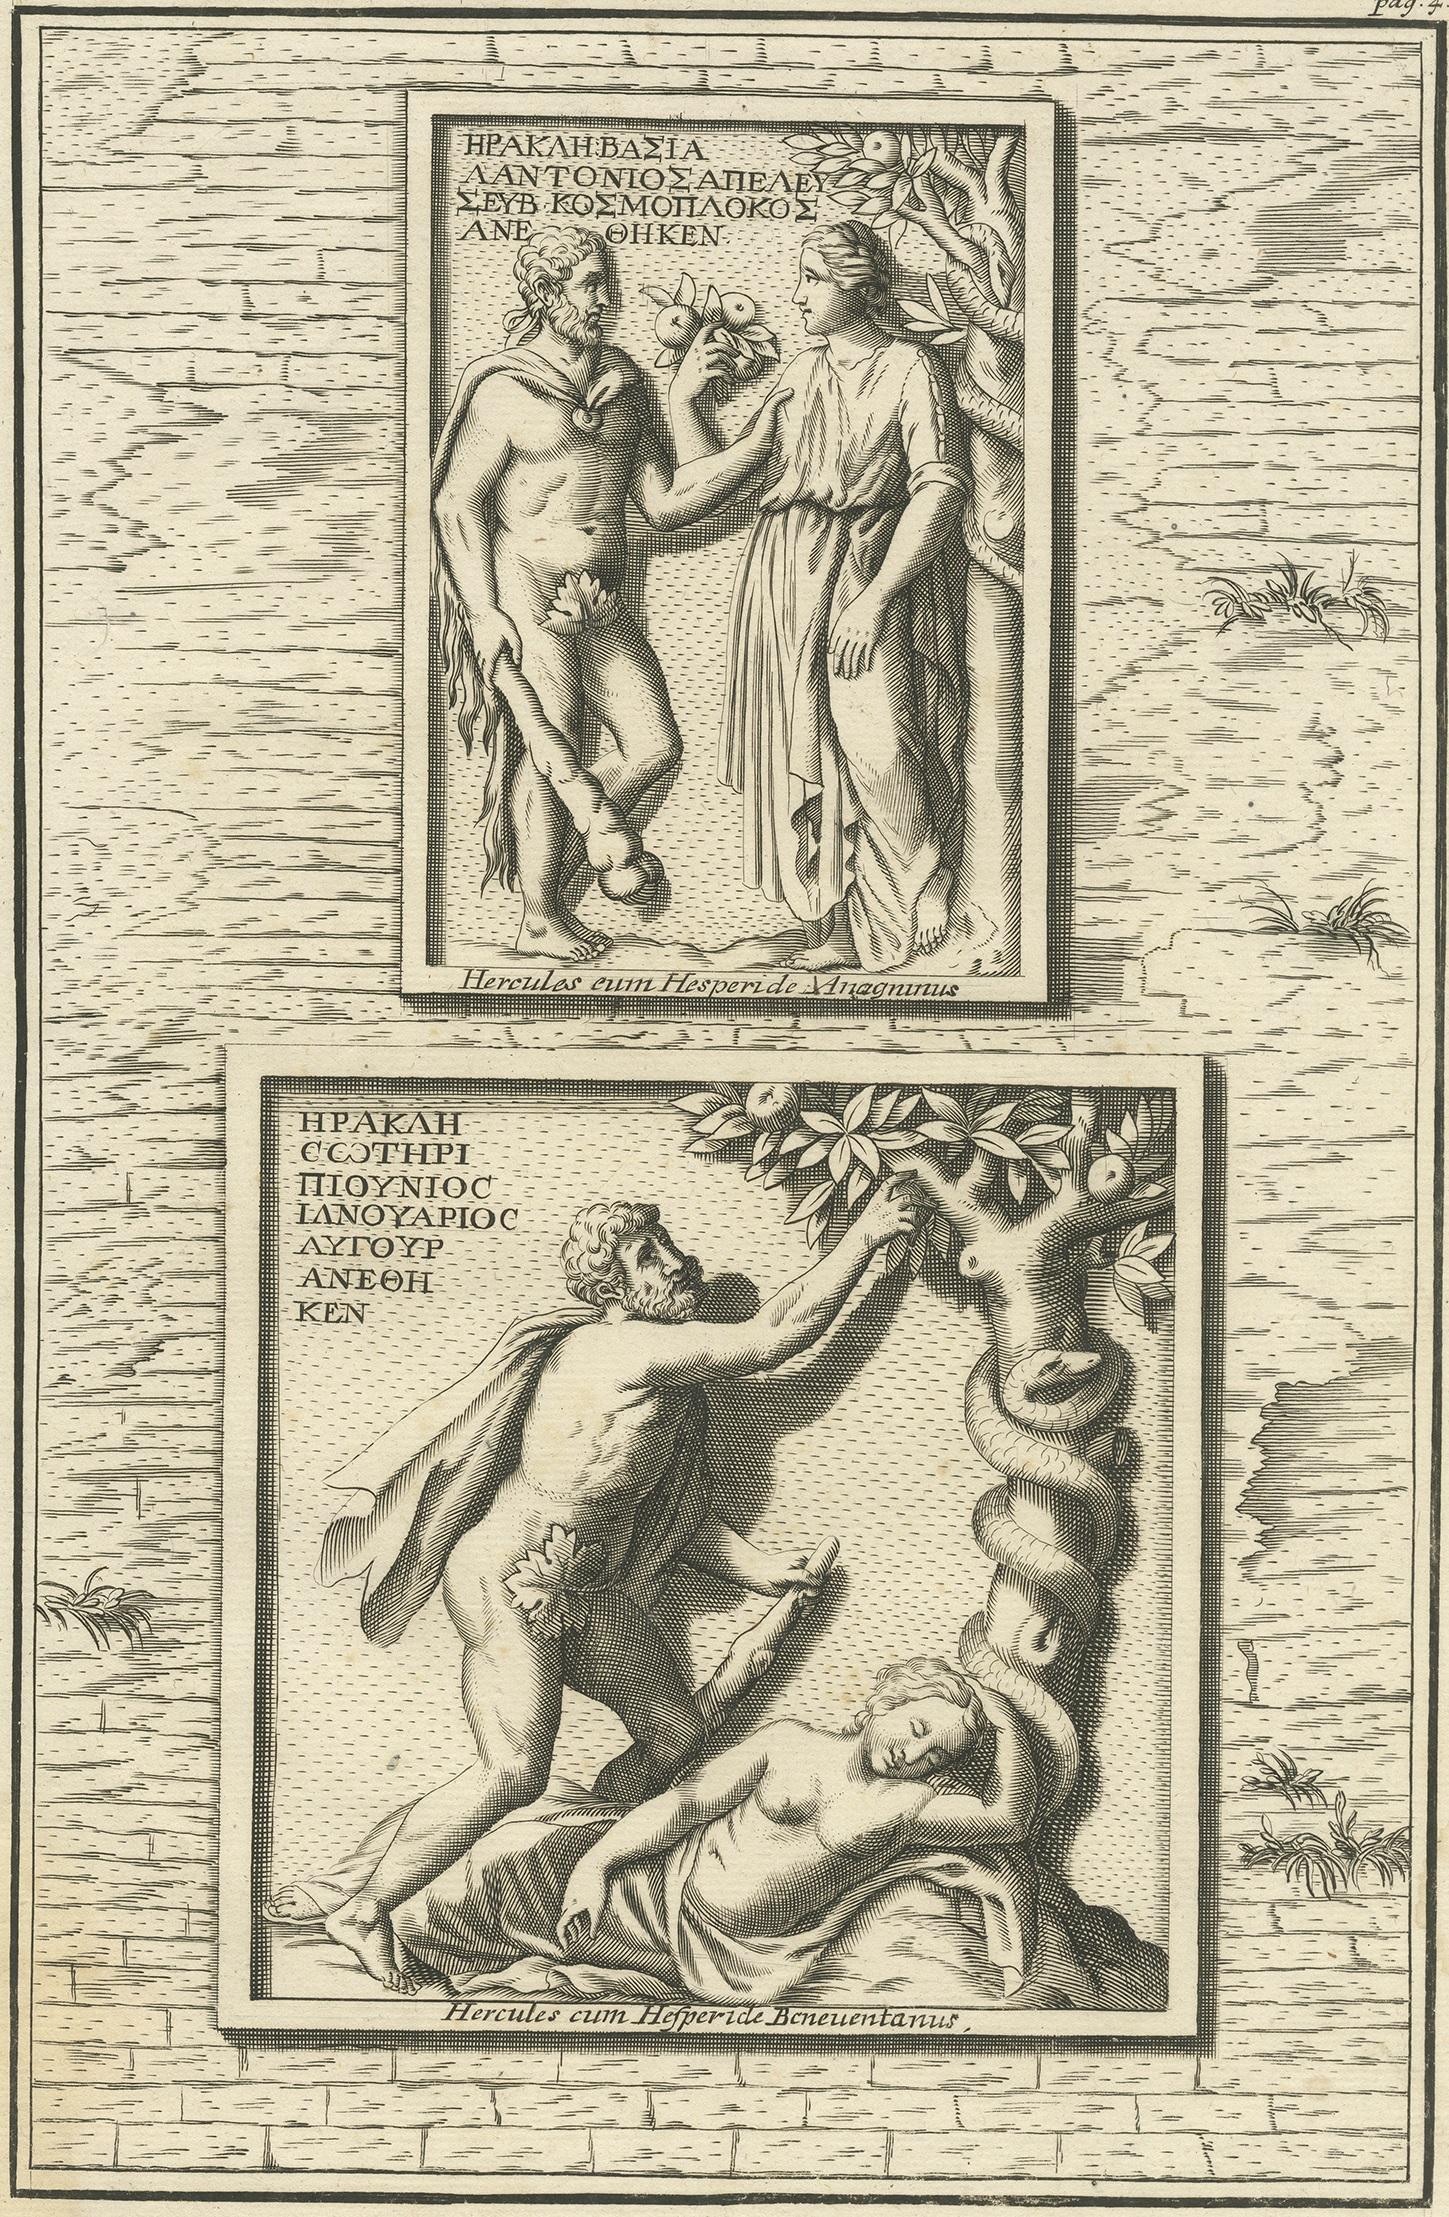 Antique print titled 'Hercules cum Hesperide Beneuentanus'. Engraving with two scenes of Hercules in the Garden of Hesperides. This print originates from 'Nurnbergische Hesperides' by J.C. Volckamer.